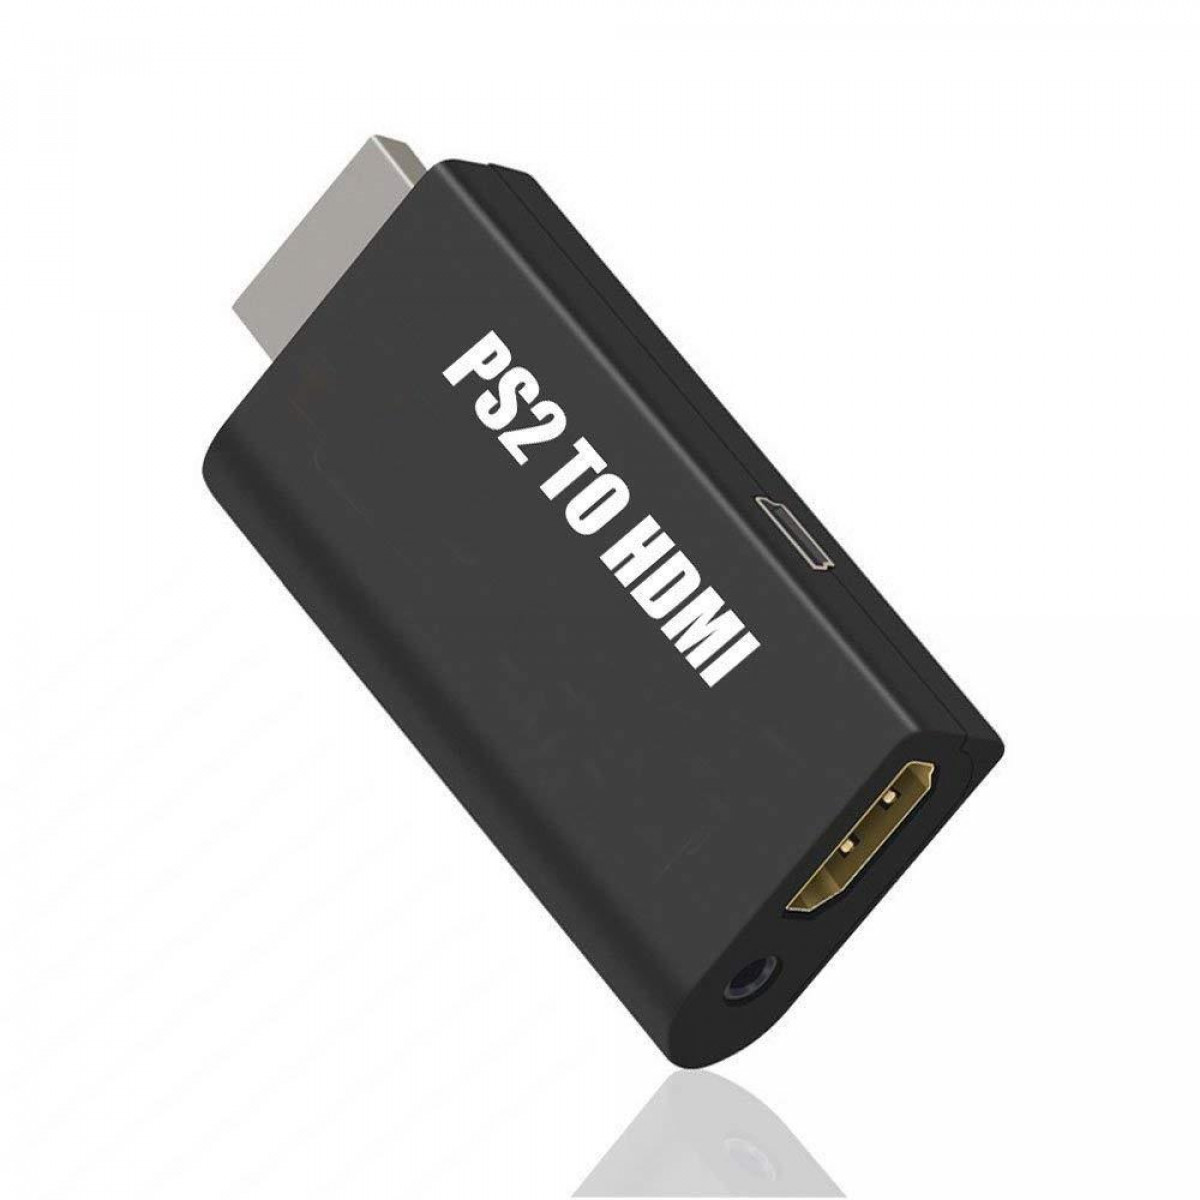 zu HDMI PS2 mm Monitore HDMI 3,5 INF für HDTV/HDMI Adapter mit zu PS2 Audioausgang Adapter